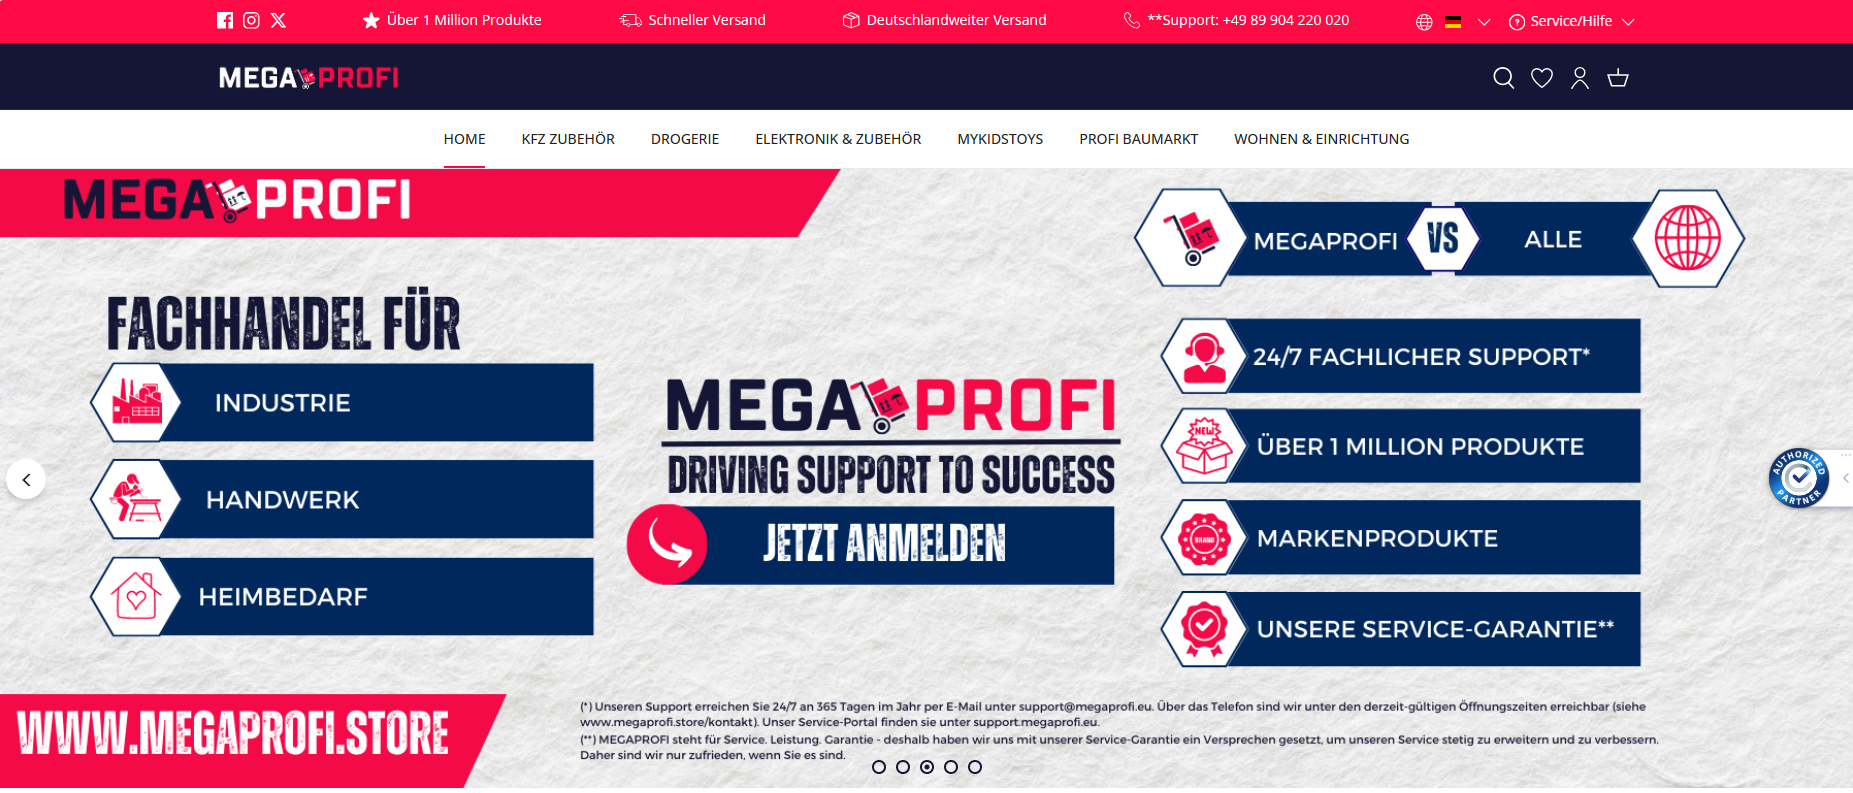 MEGAPROFI UK stellt neuen Shop Online